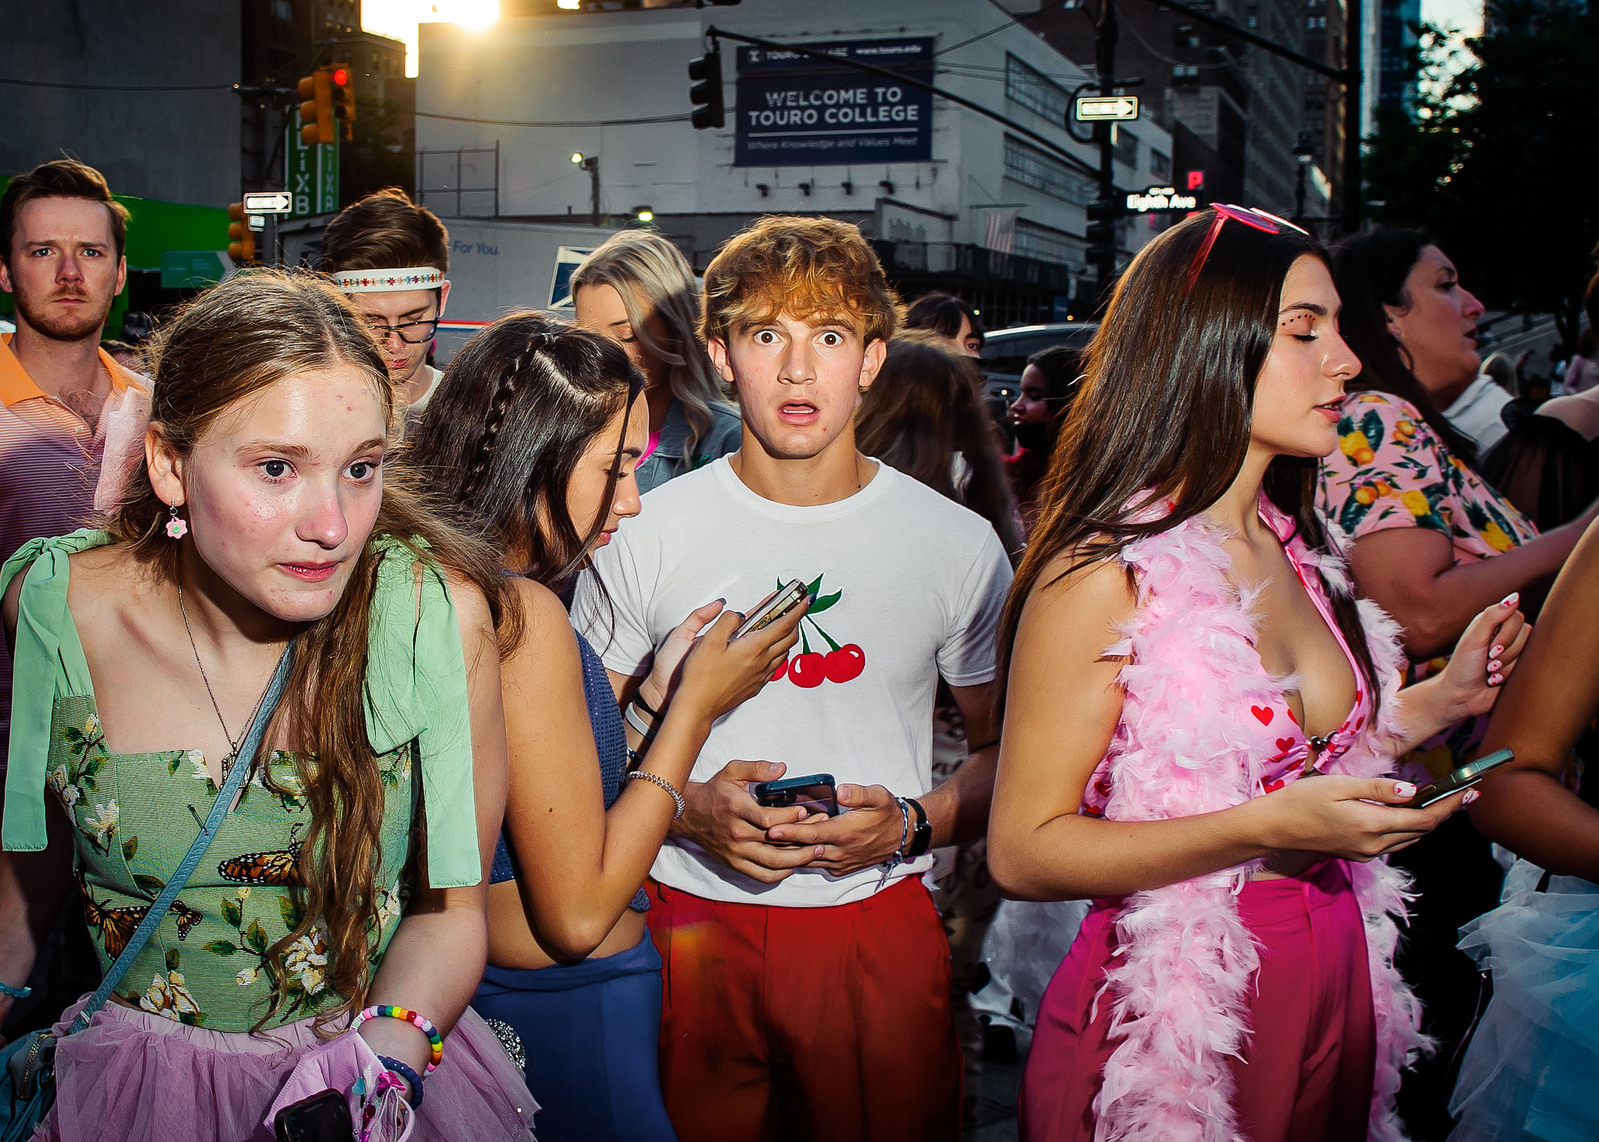 On Photobooth: Harry Styles Fans Put On a Show / Photos by Dina Litovsky